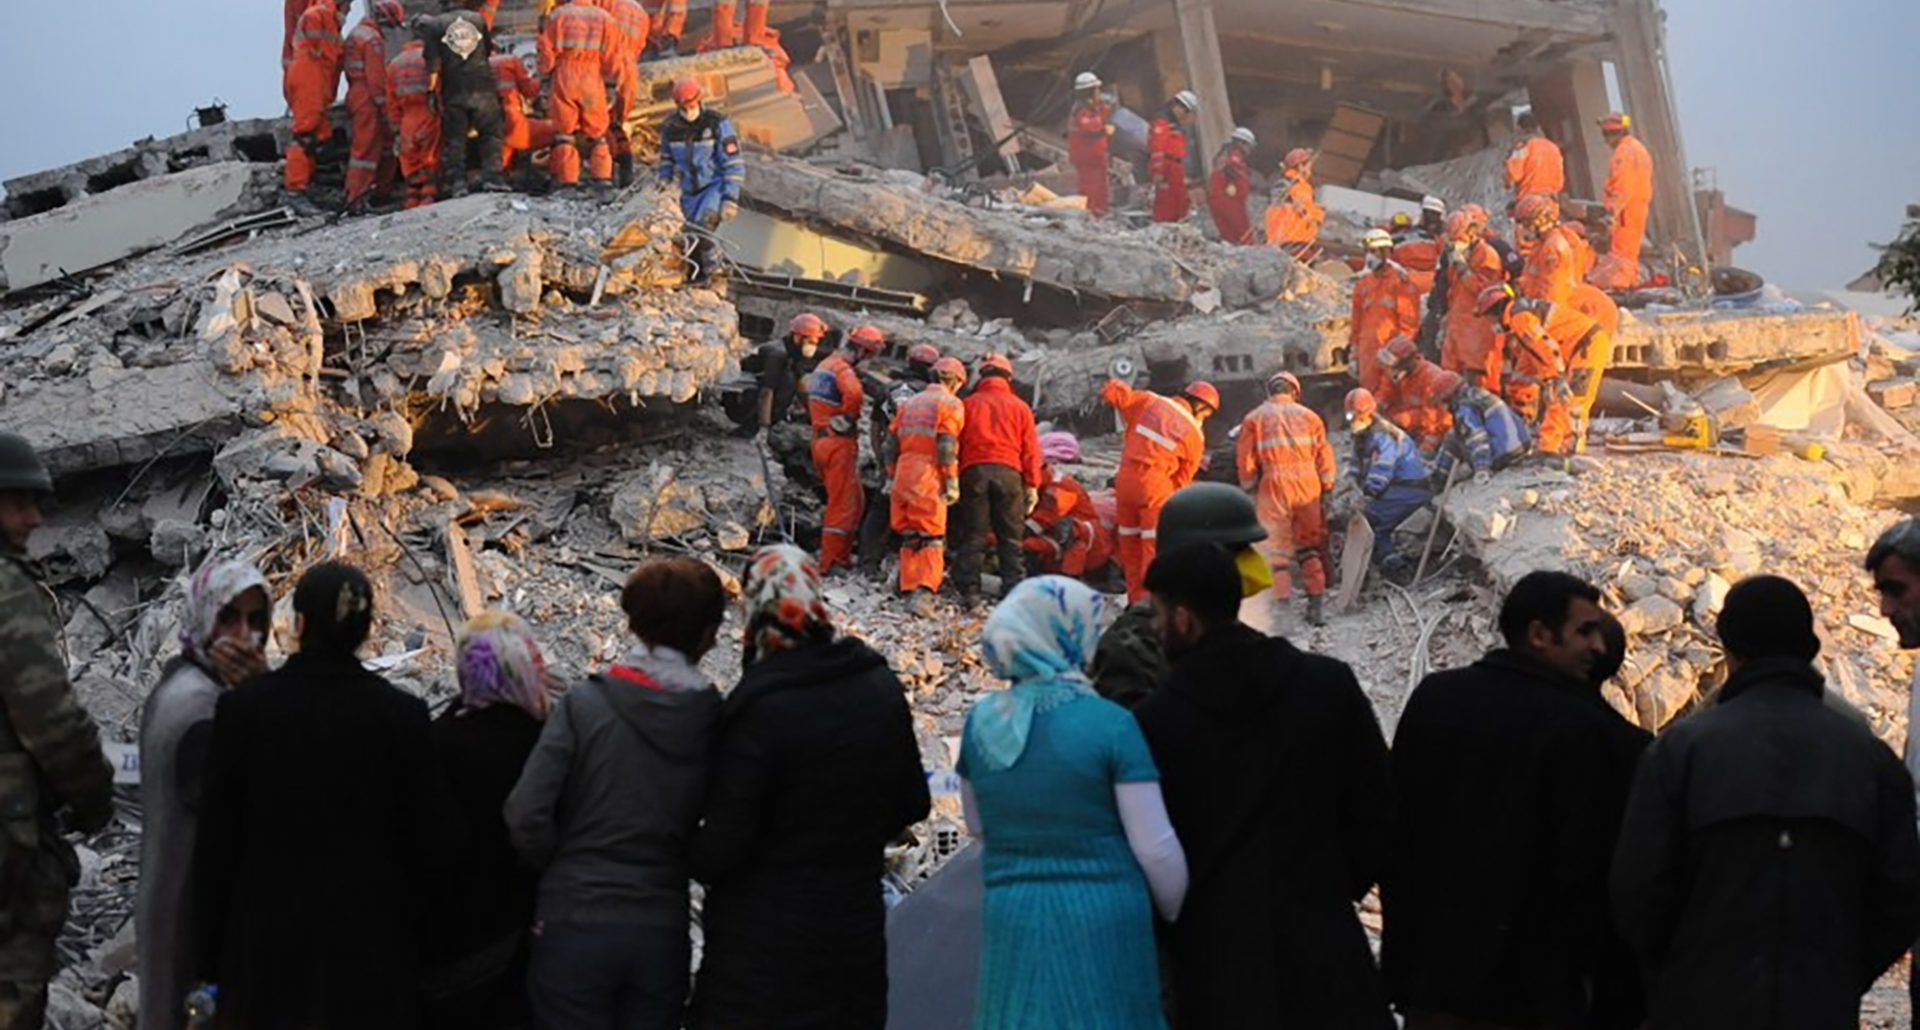 Turkey, Van earthquake, IHH relief effort, October 2011. Photo: Mustafa ÖZTÜRK/IHH. License: Attribution-Noncommercial-No Derivative Works, Some rights reserved by İHH İnsani Yardım. https://www.flickr.com/photos/ihhinsaniyardimvakfi/6286195196/sizes/l